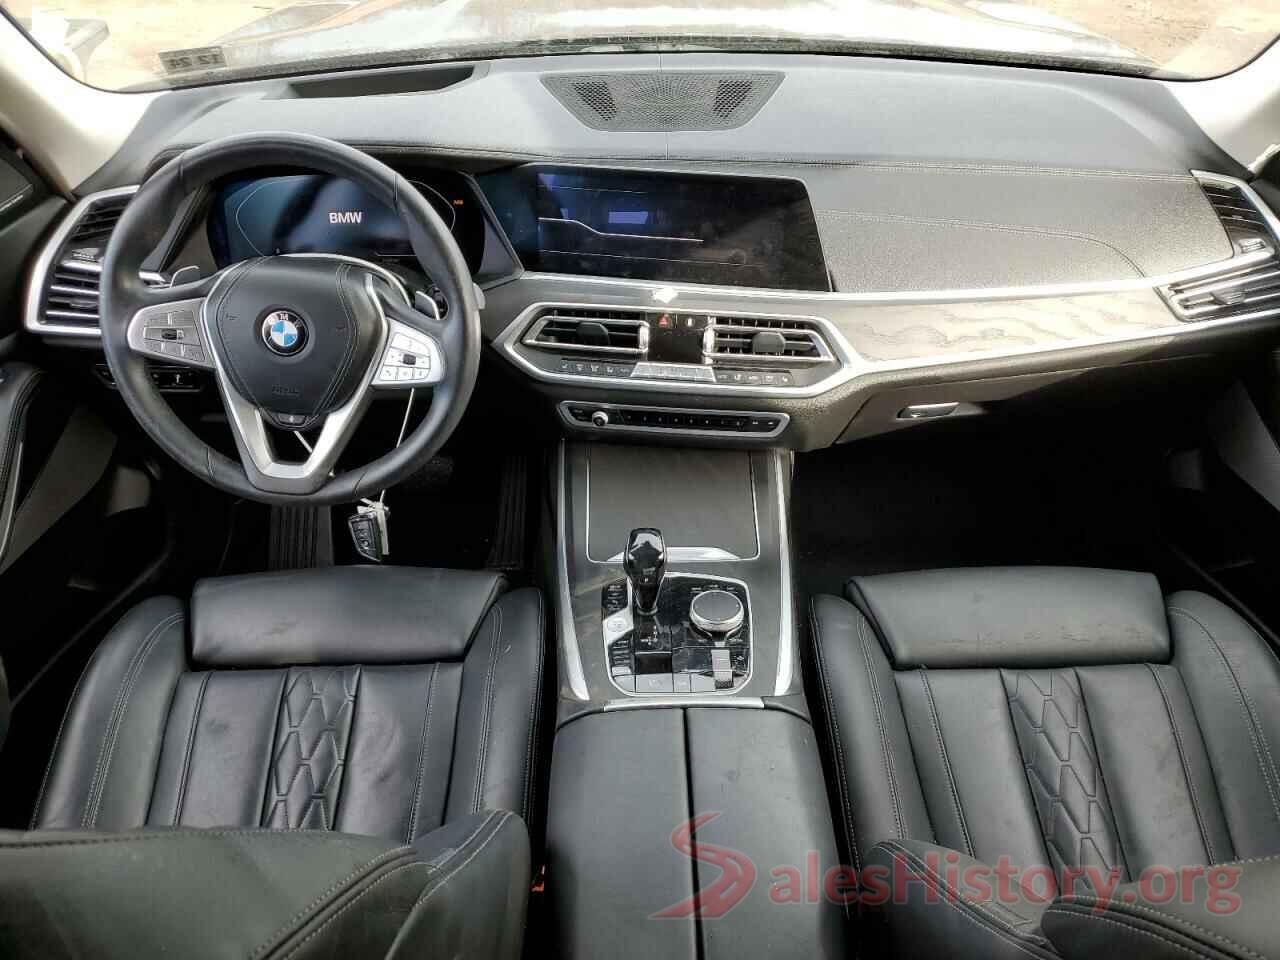 5UXCW2C01L9B51529 2020 BMW X7